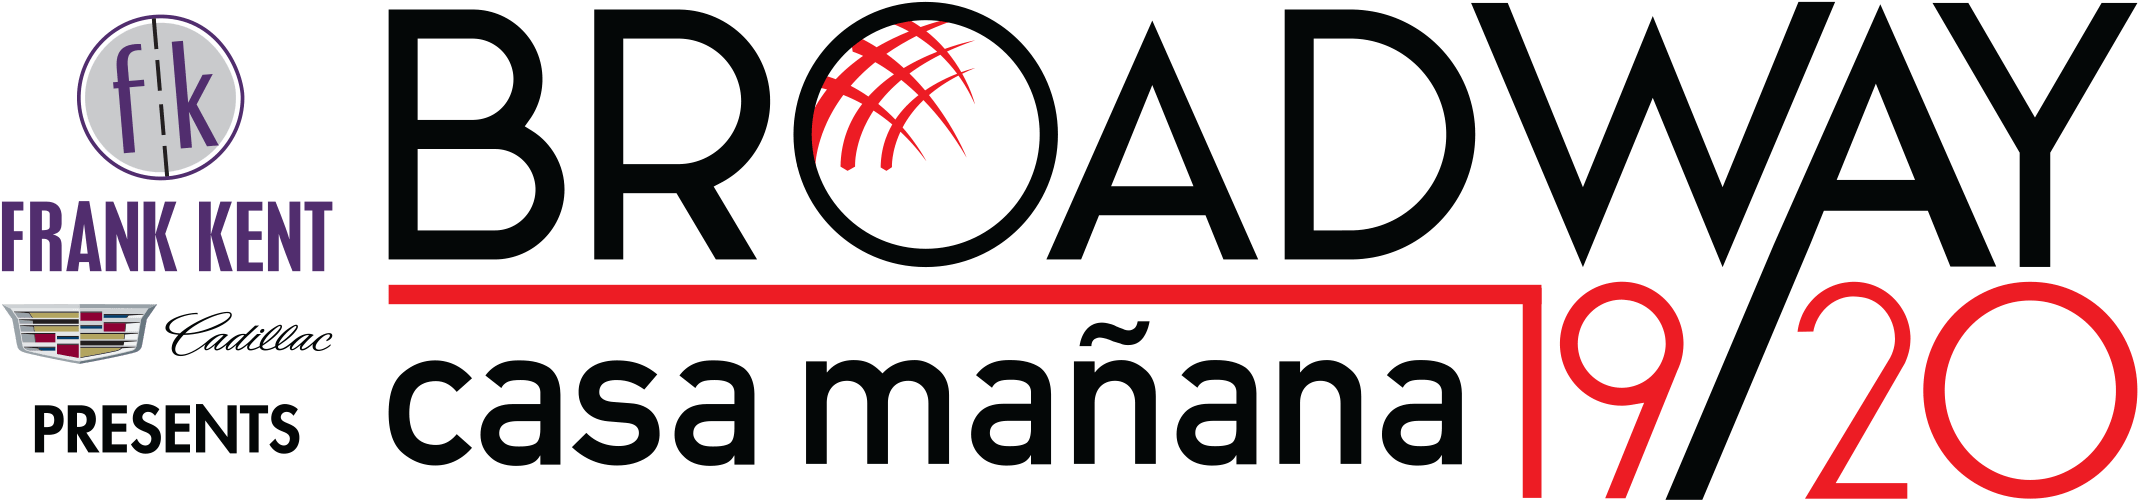 Broadway Casa Manana1920 Logo PNG